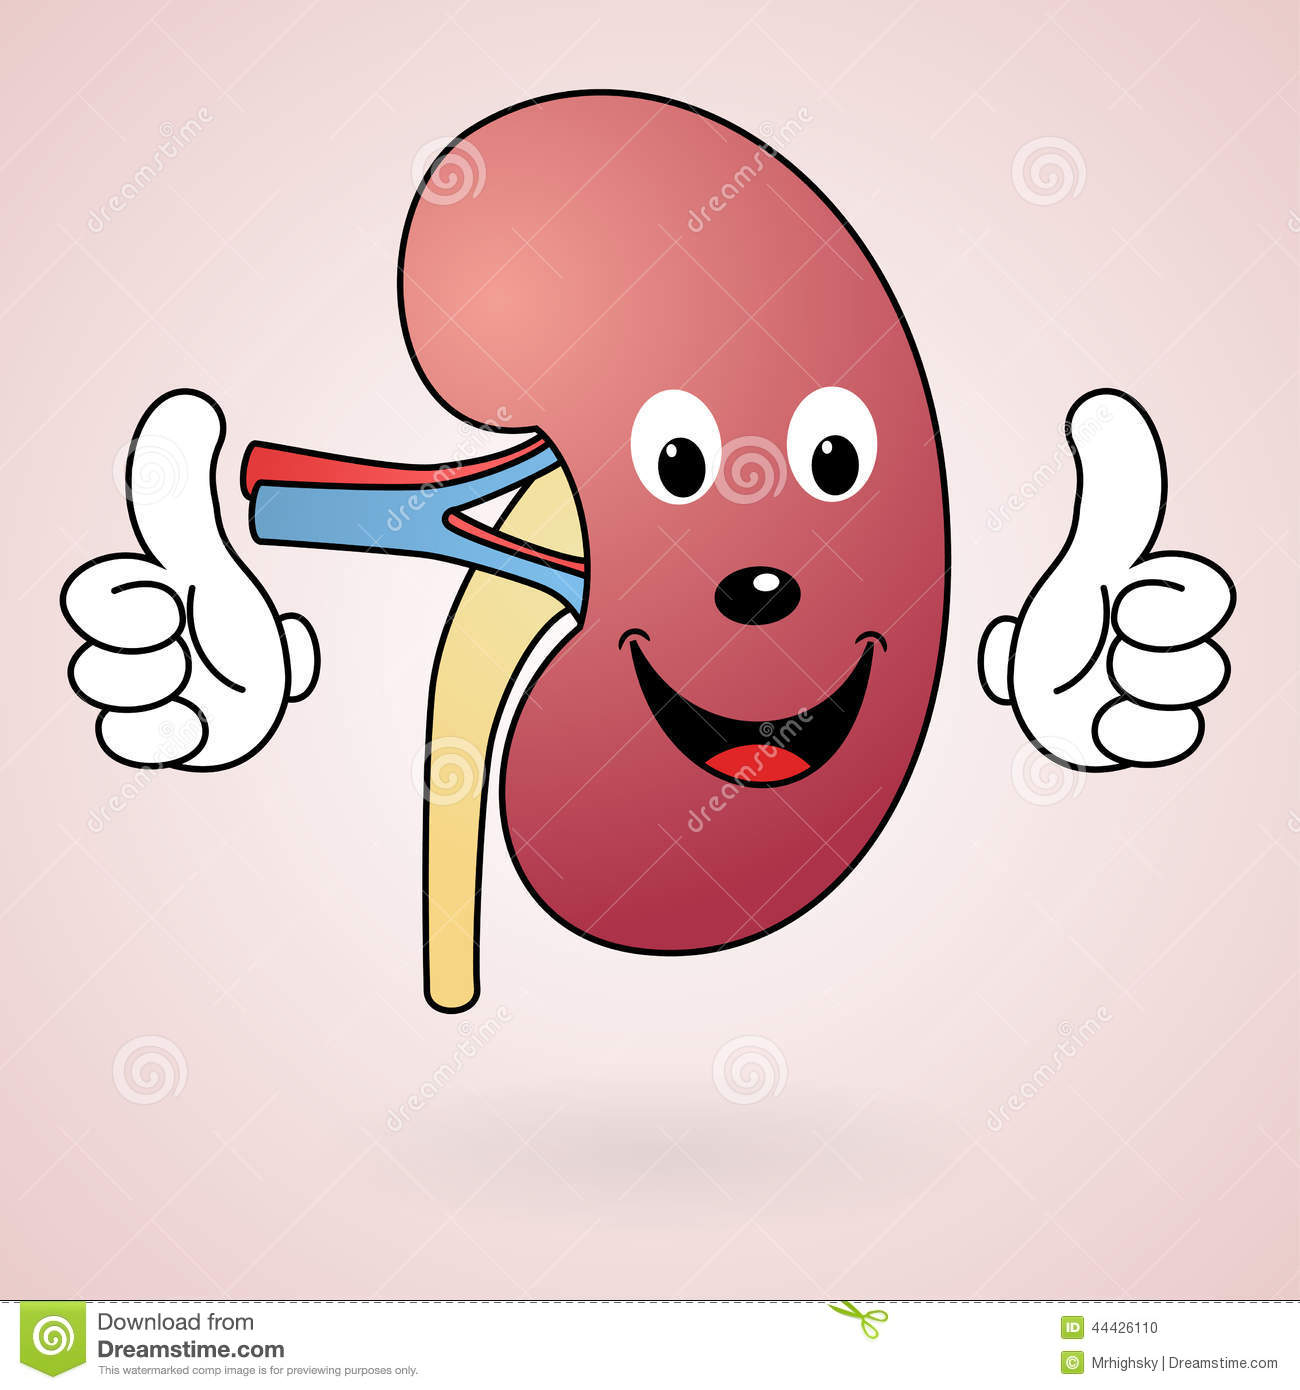 Illustration Of Happy Healthy Cartoon Kidney Giving Thumbs Up